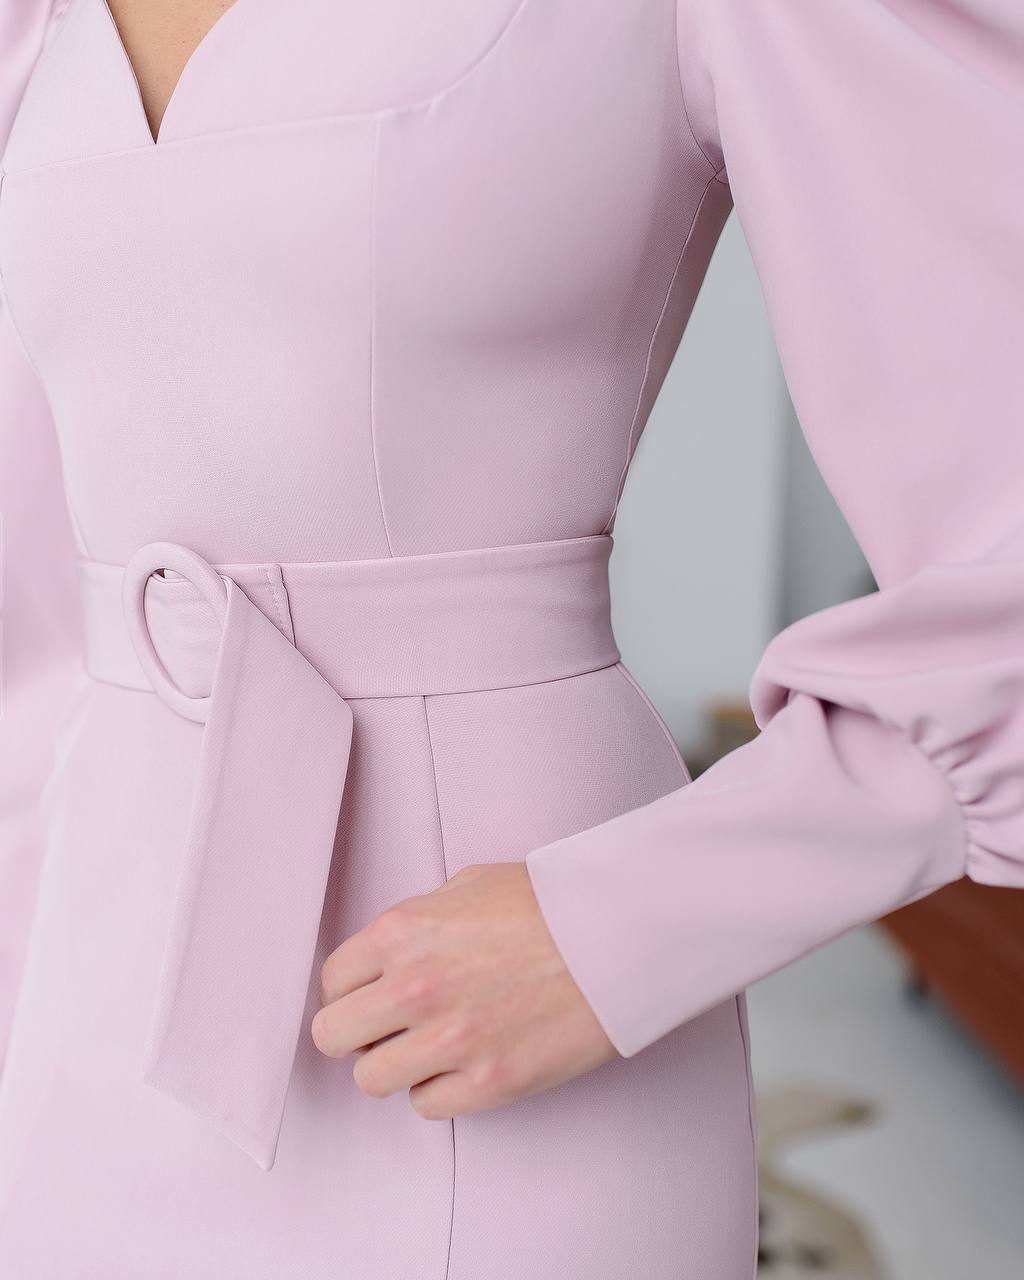 a close up of a woman wearing a pink dress